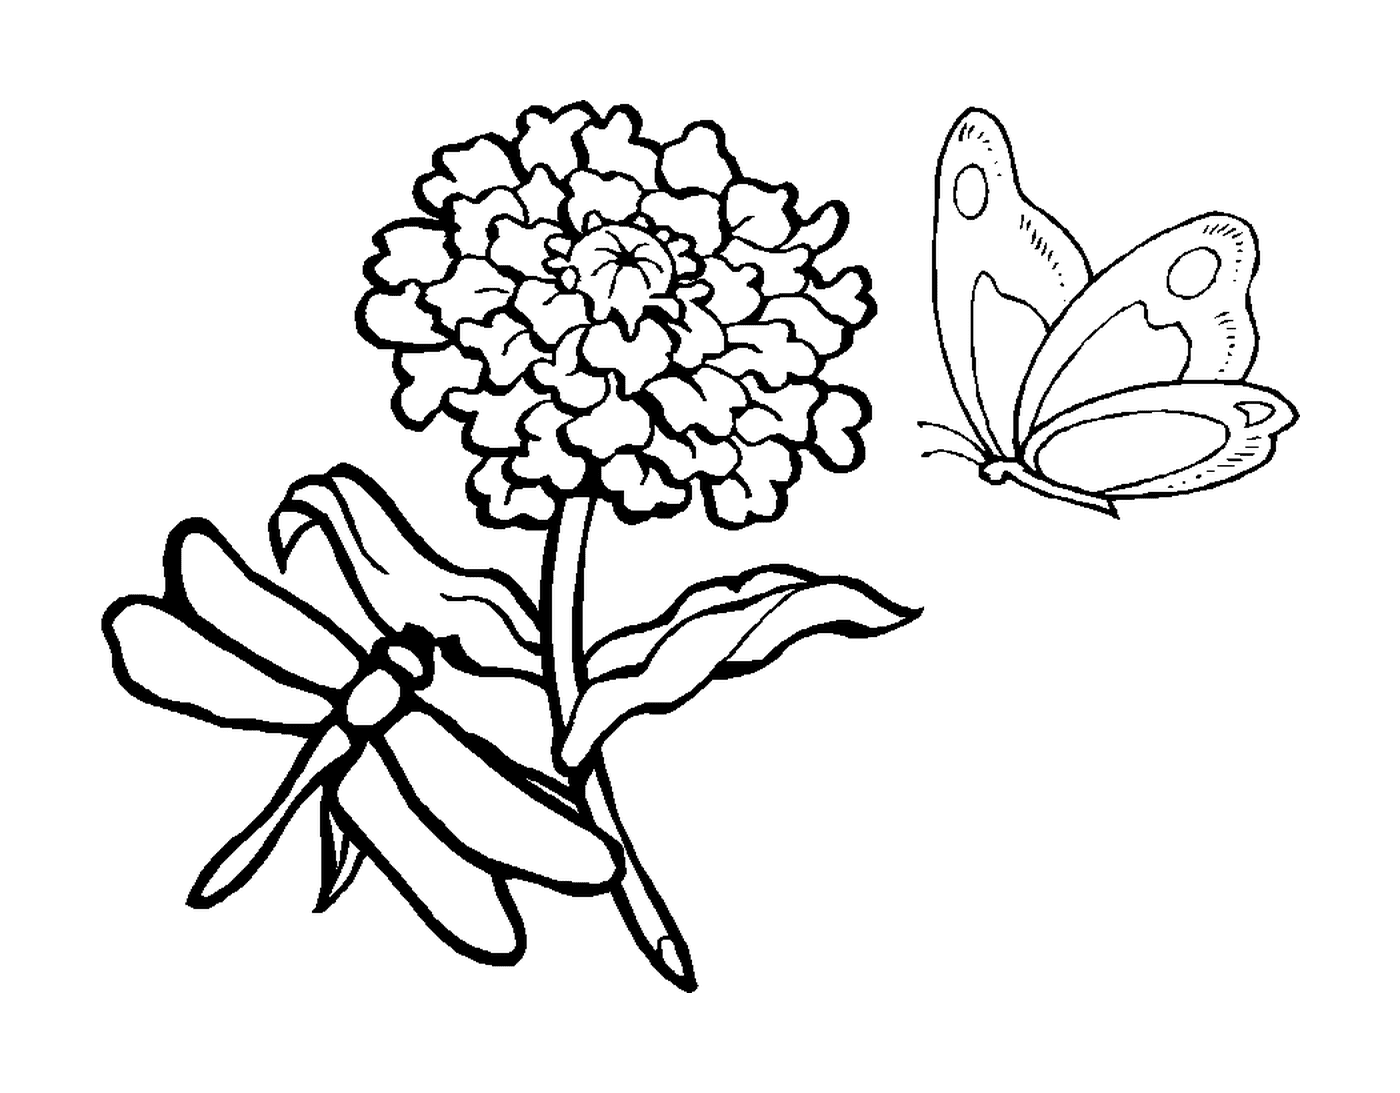  libellula e farfalla vicino 